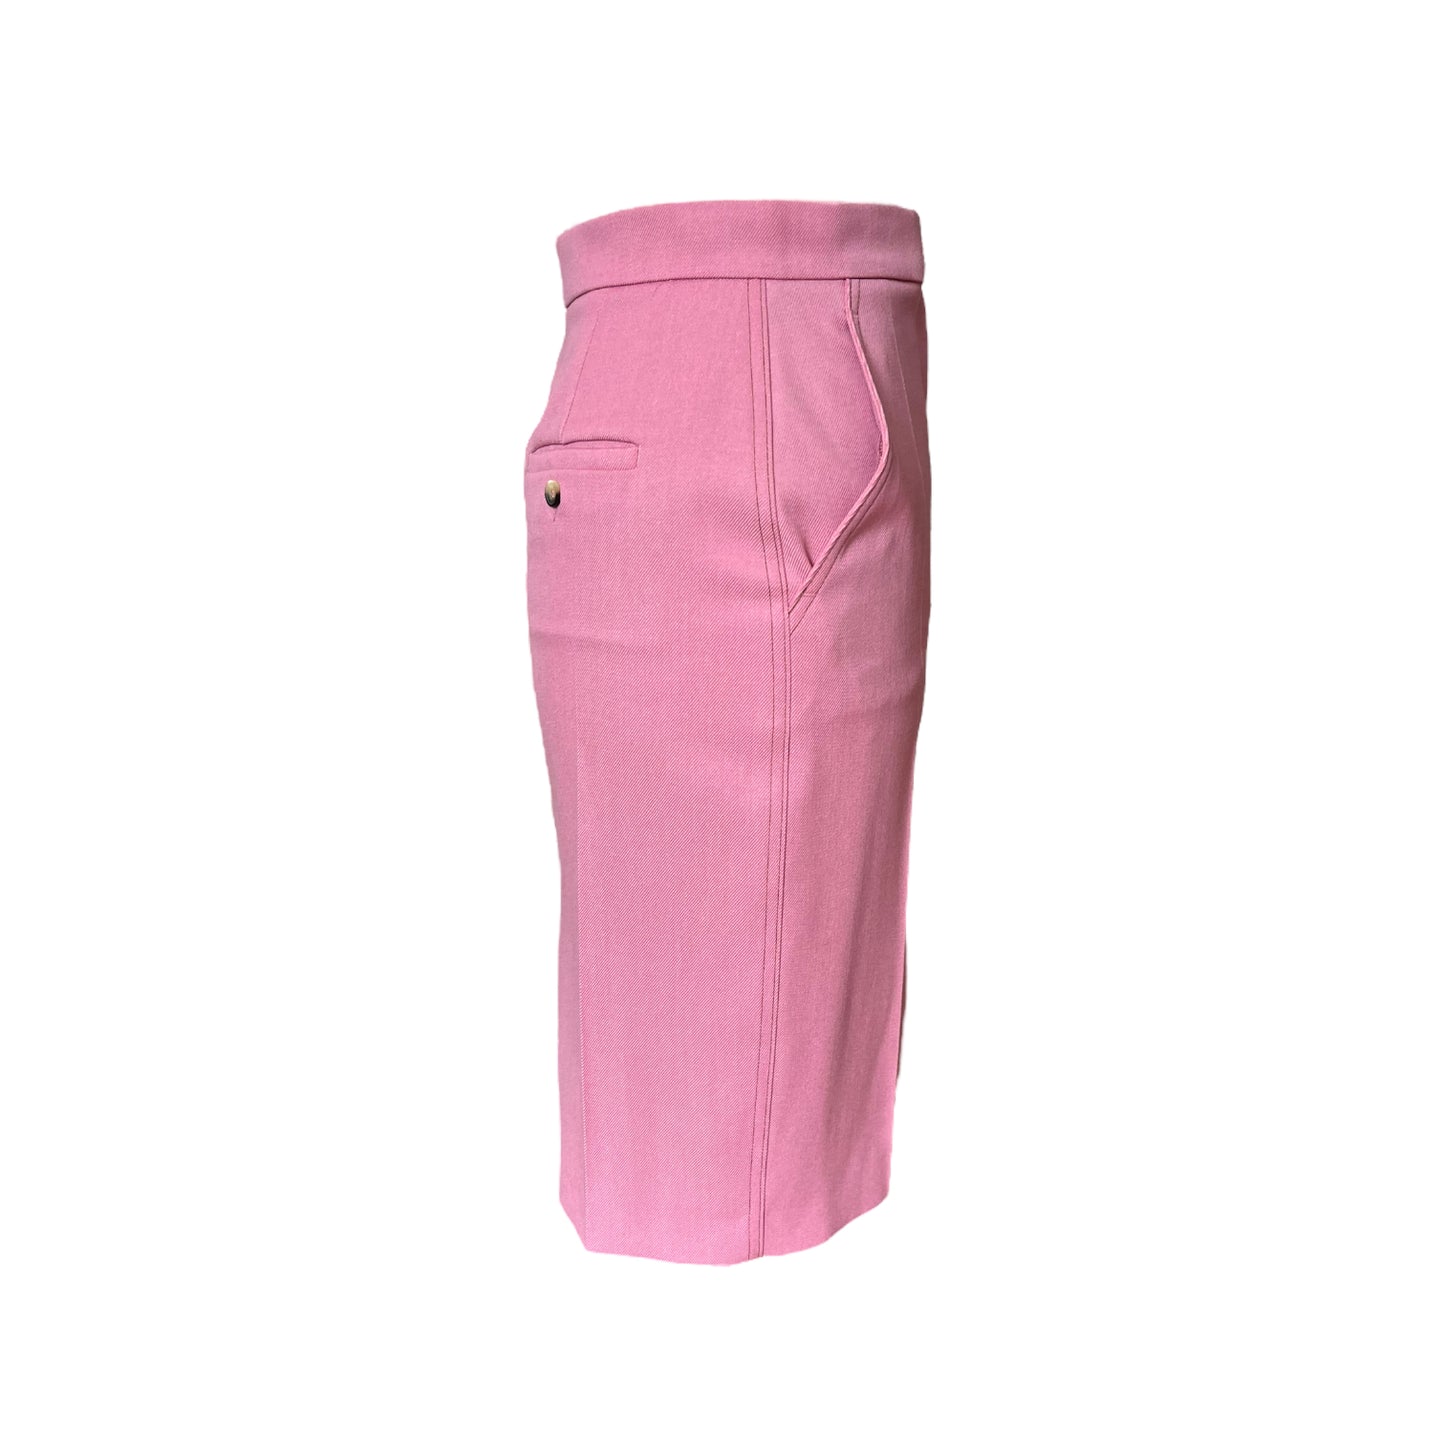 NEW Max Mara Pink Skirt